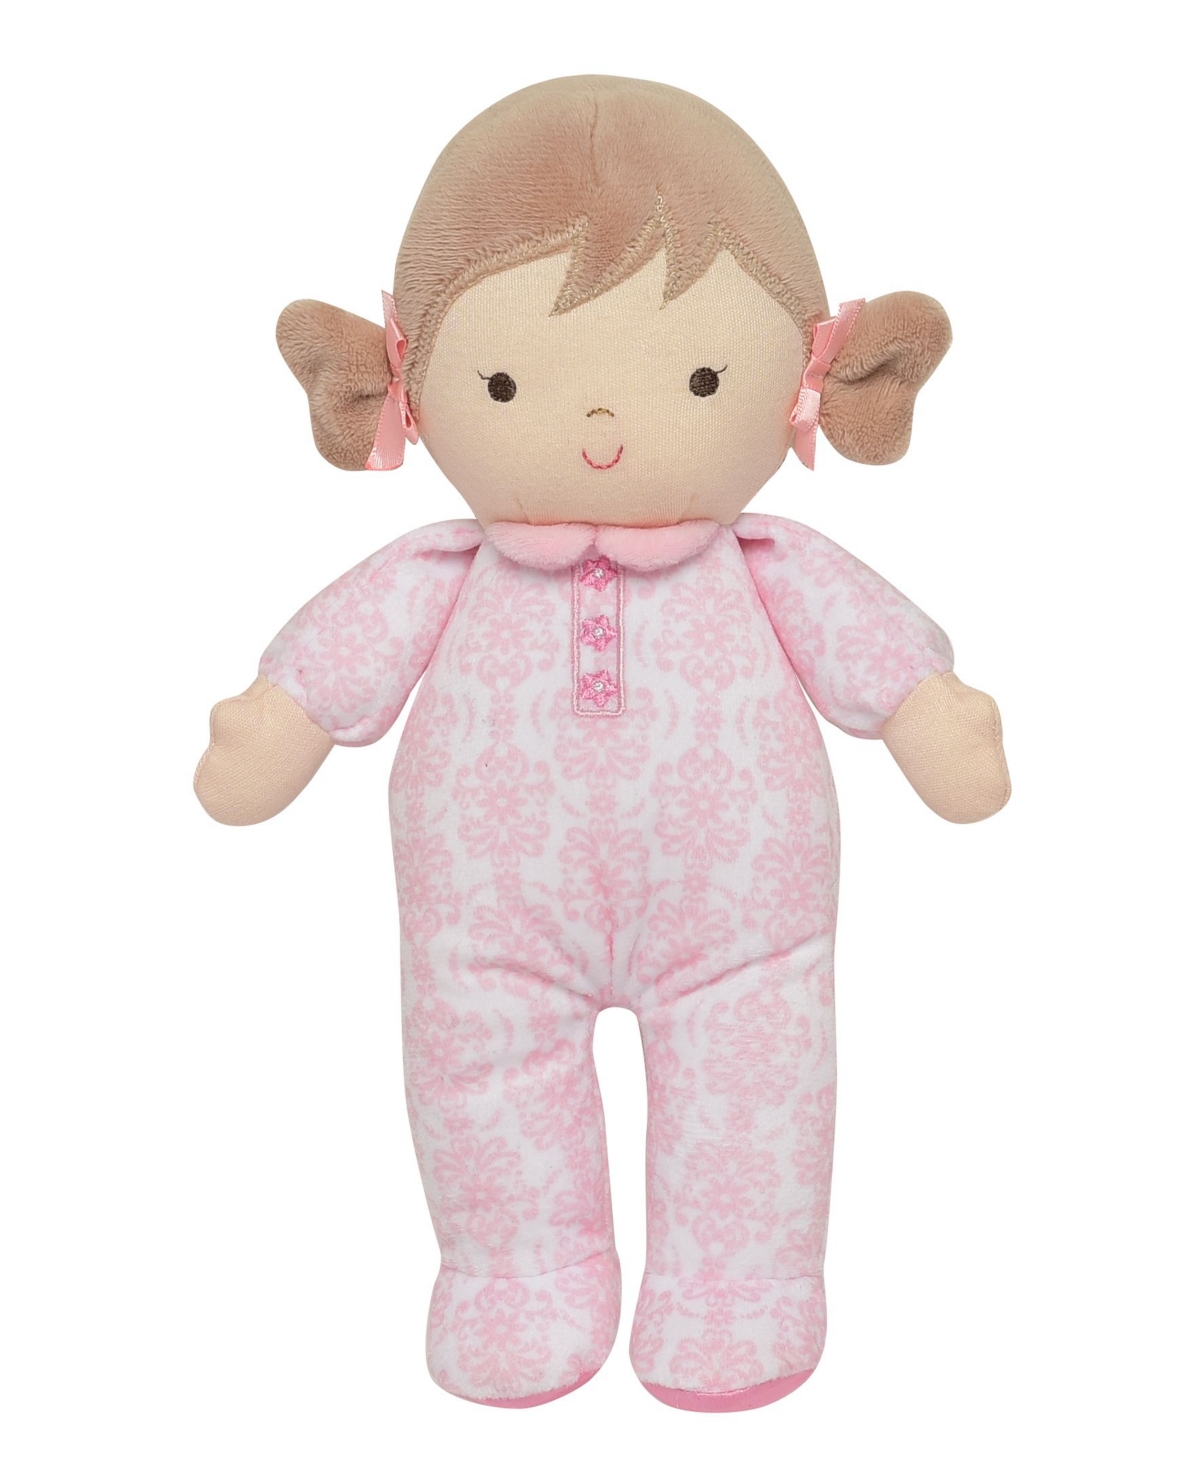 Little Me Babies' Bridget Damask Plush Doll In Pink